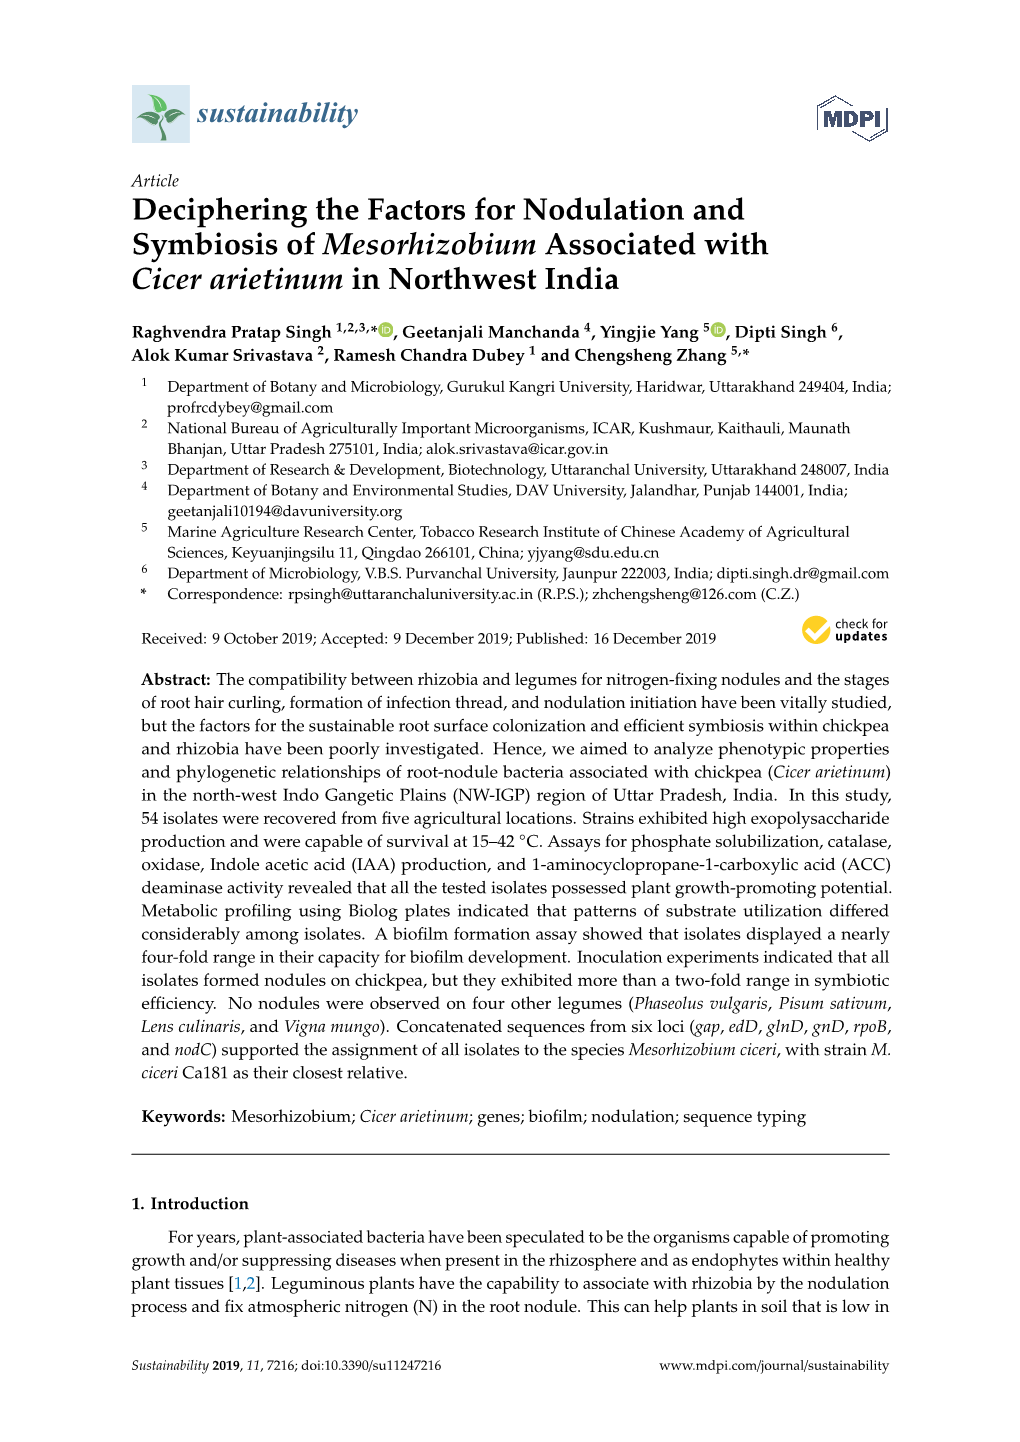 Deciphering the Factors for Nodulation and Symbiosis of Mesorhizobium Associated with Cicer Arietinum in Northwest India